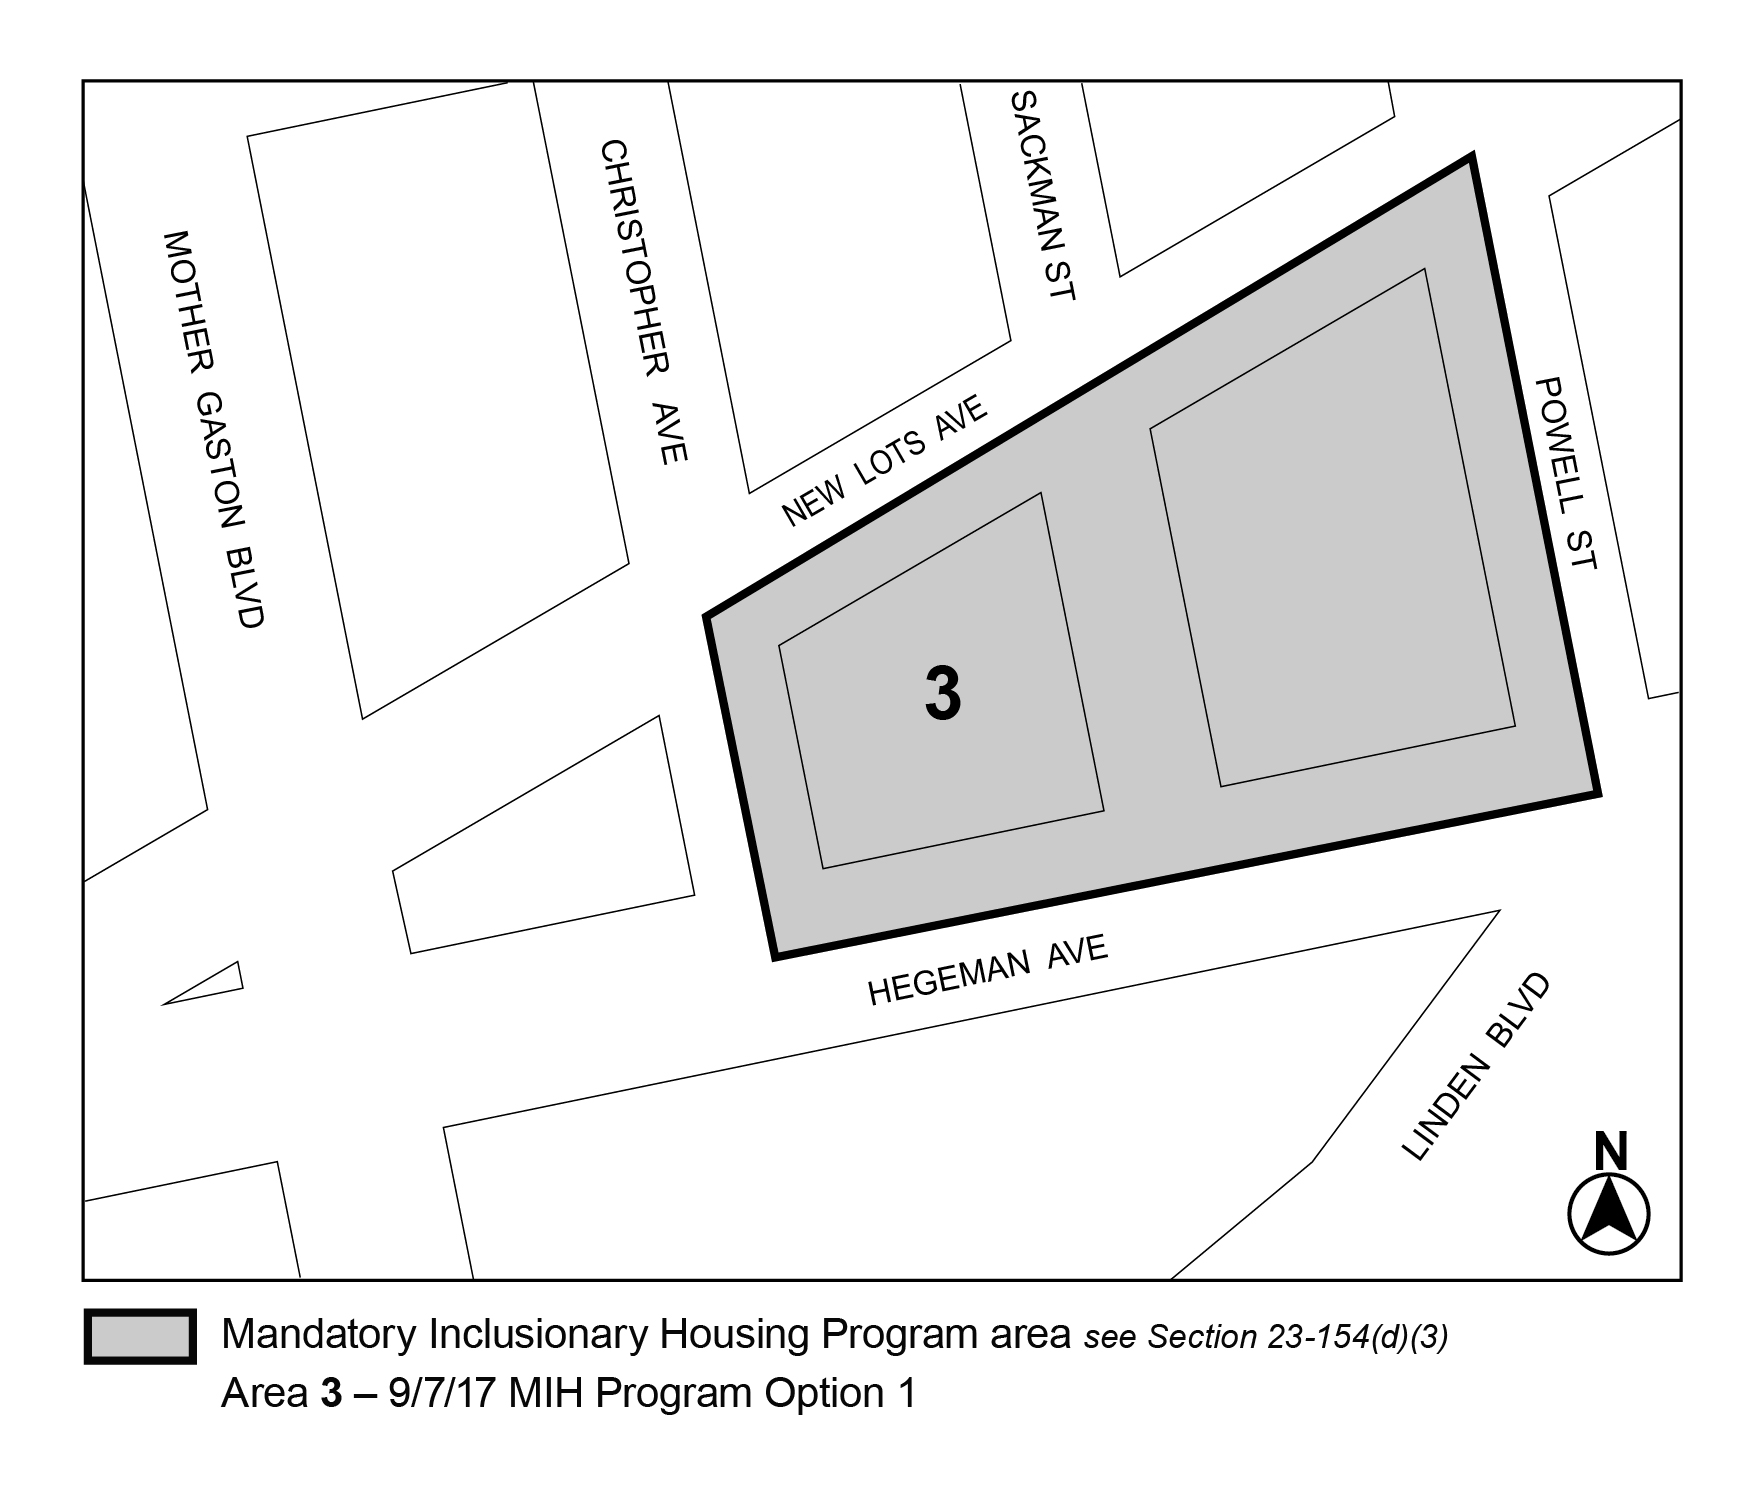 APPENDIX F, Brooklyn CD 16, Map 2, MIH area 3 (Option 1) per Ebenezer Plaza (N 170190 ZRK) adopted 7 September 2017